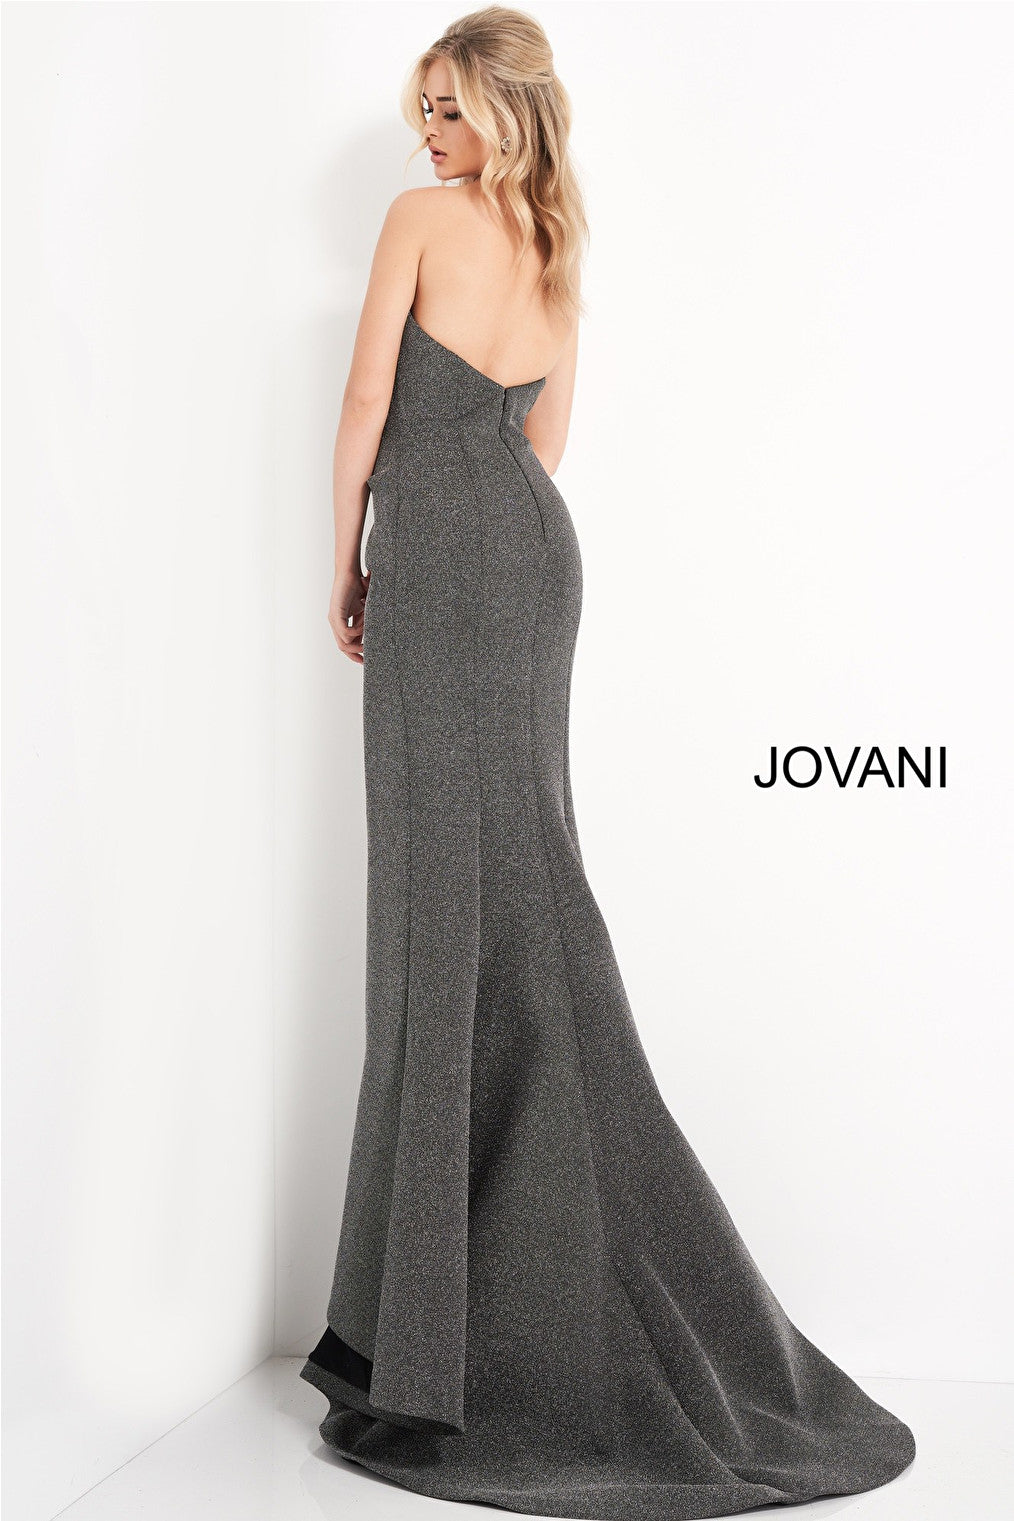 Strapless sheath black silver evening dress Jovani 05490